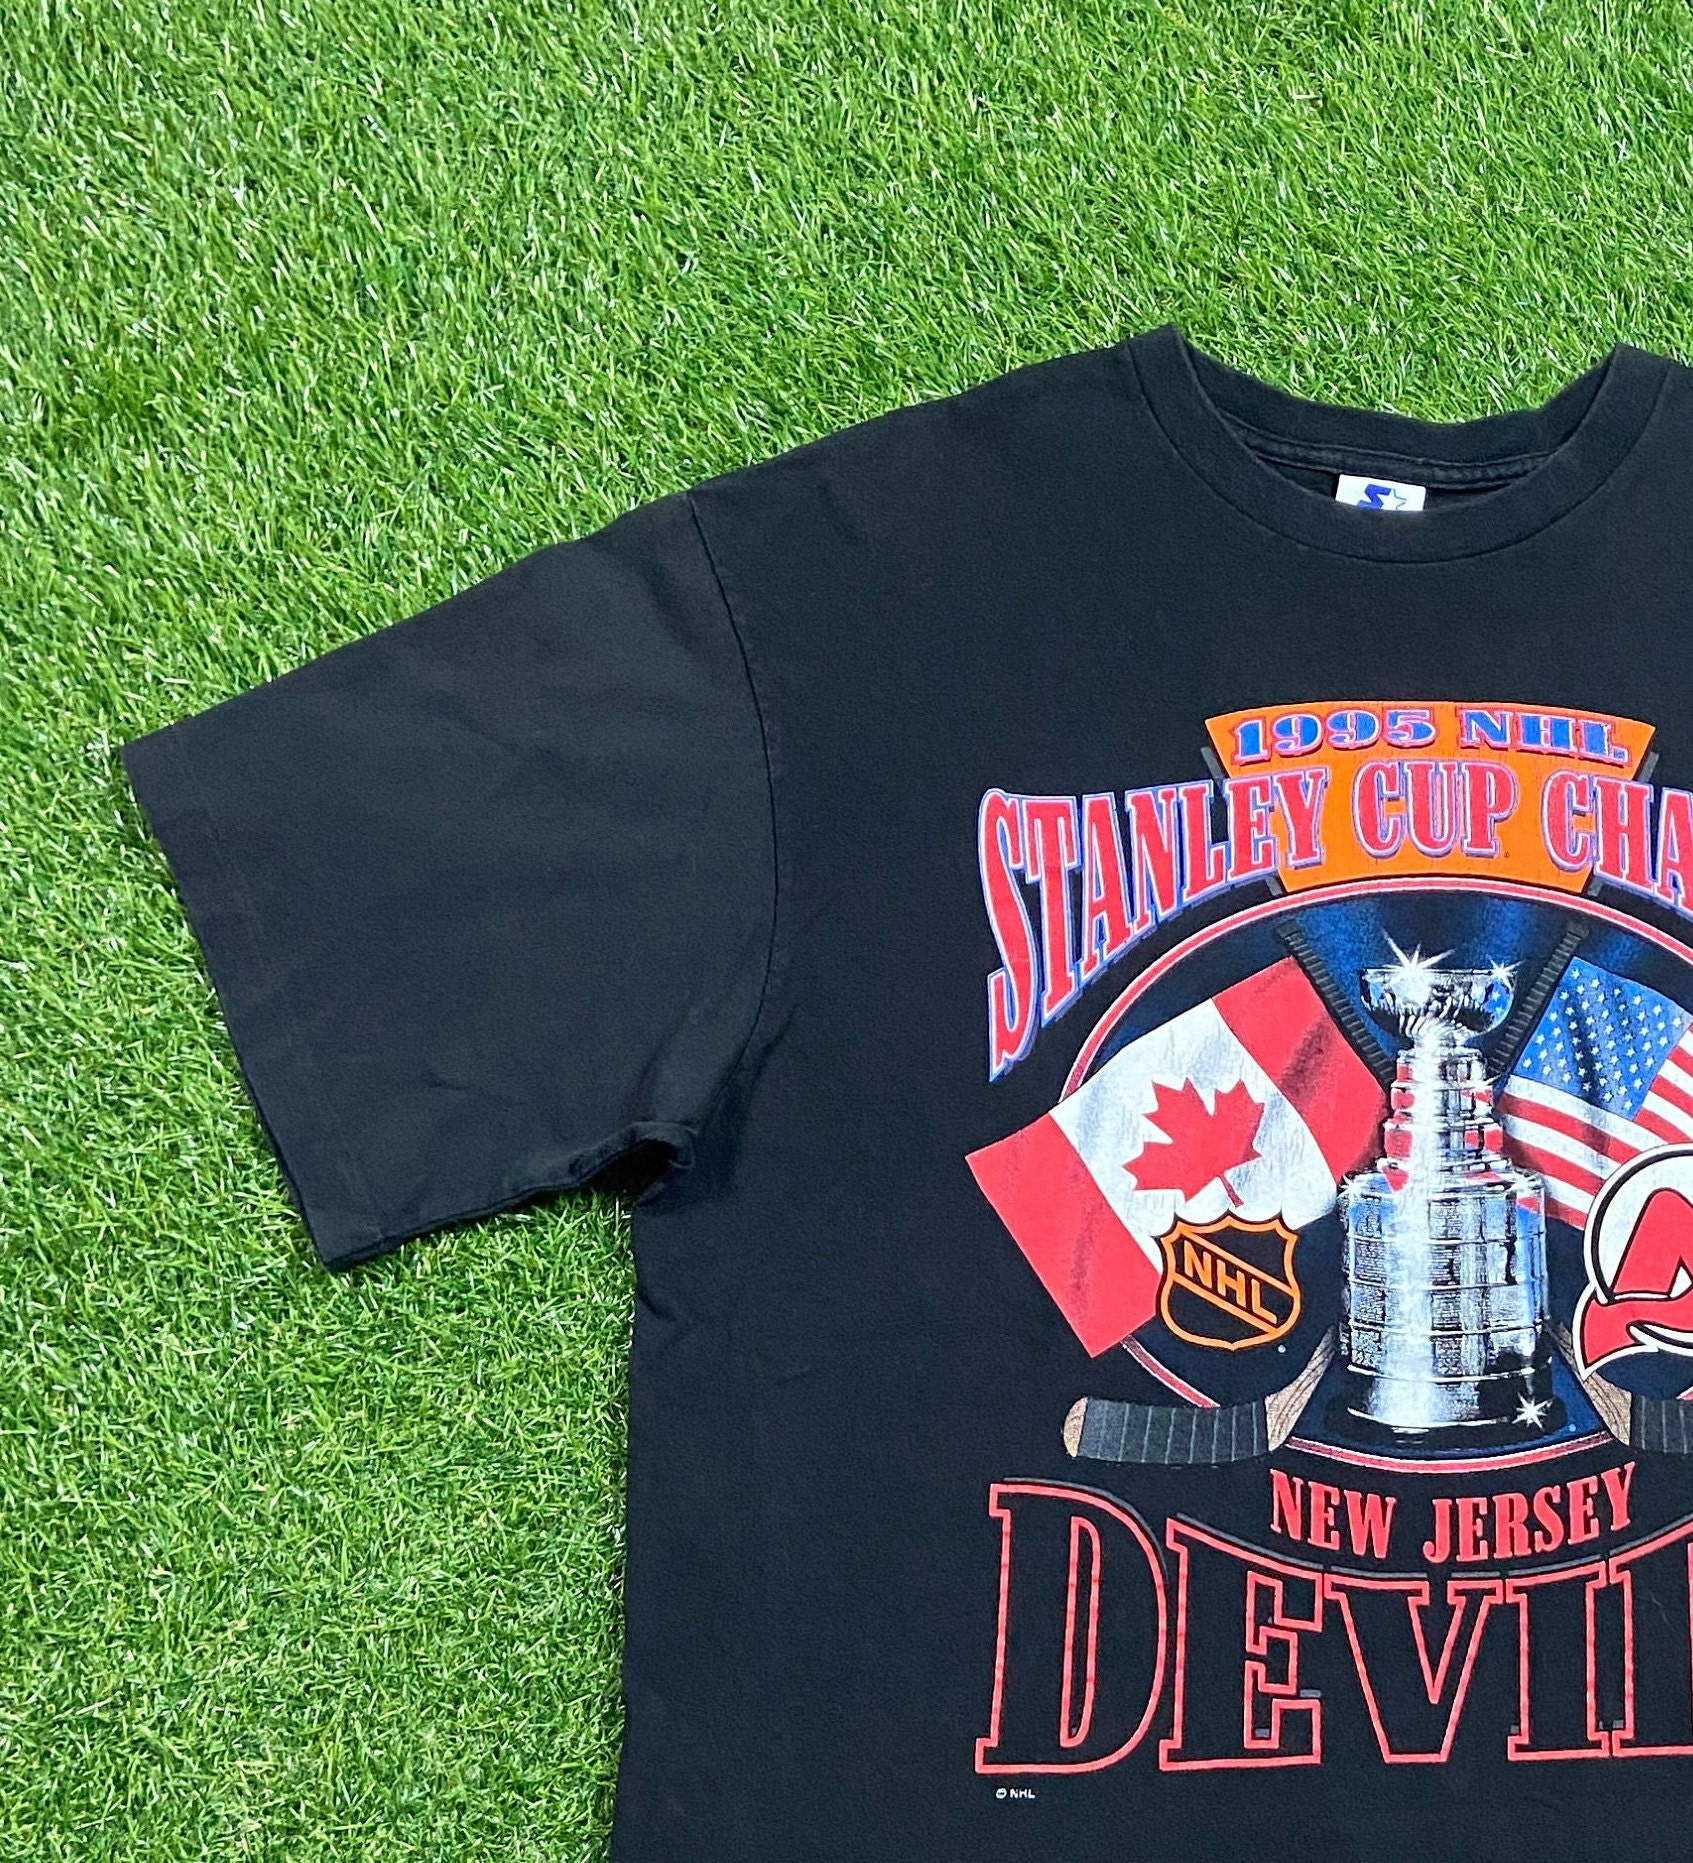 Vintage 1995 New Jersey Devils unisex, t shirt New Jersey Devils t shirt  W00224